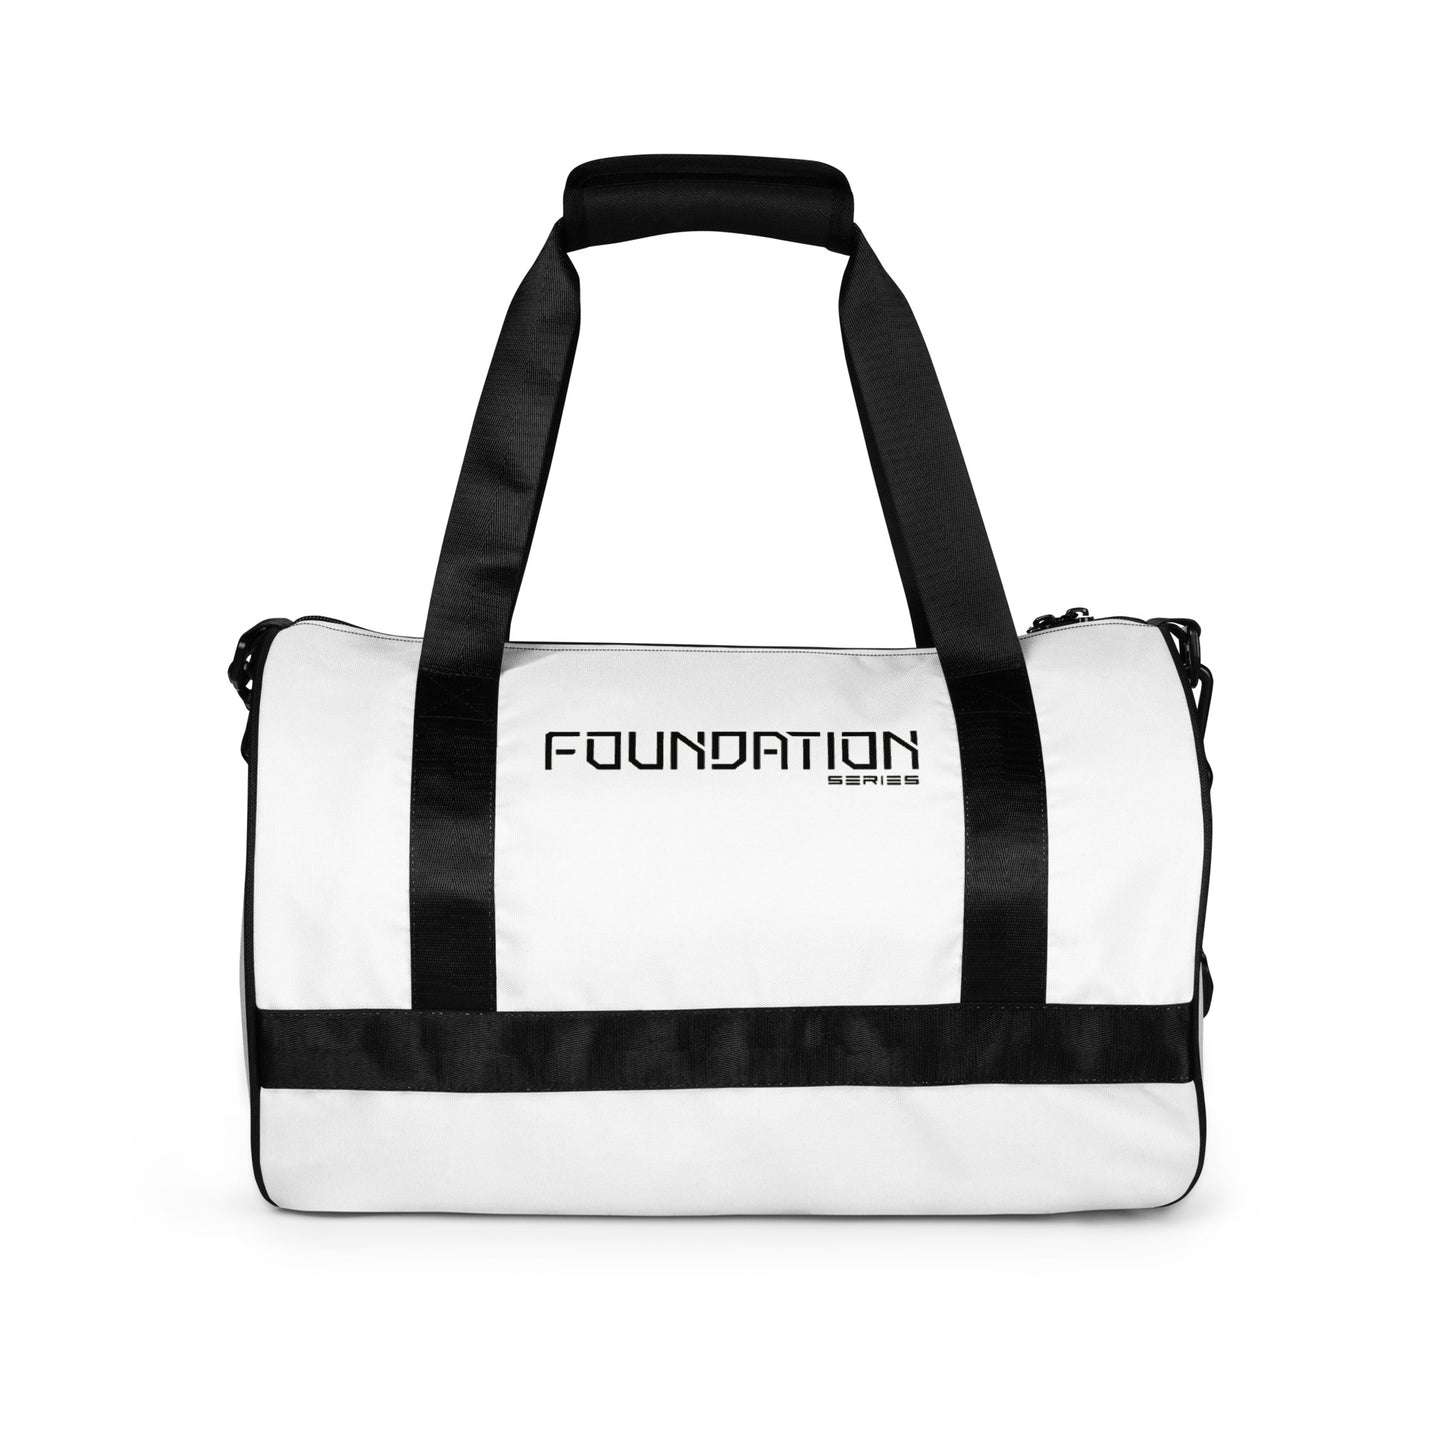 Foundation Series Gym Bag